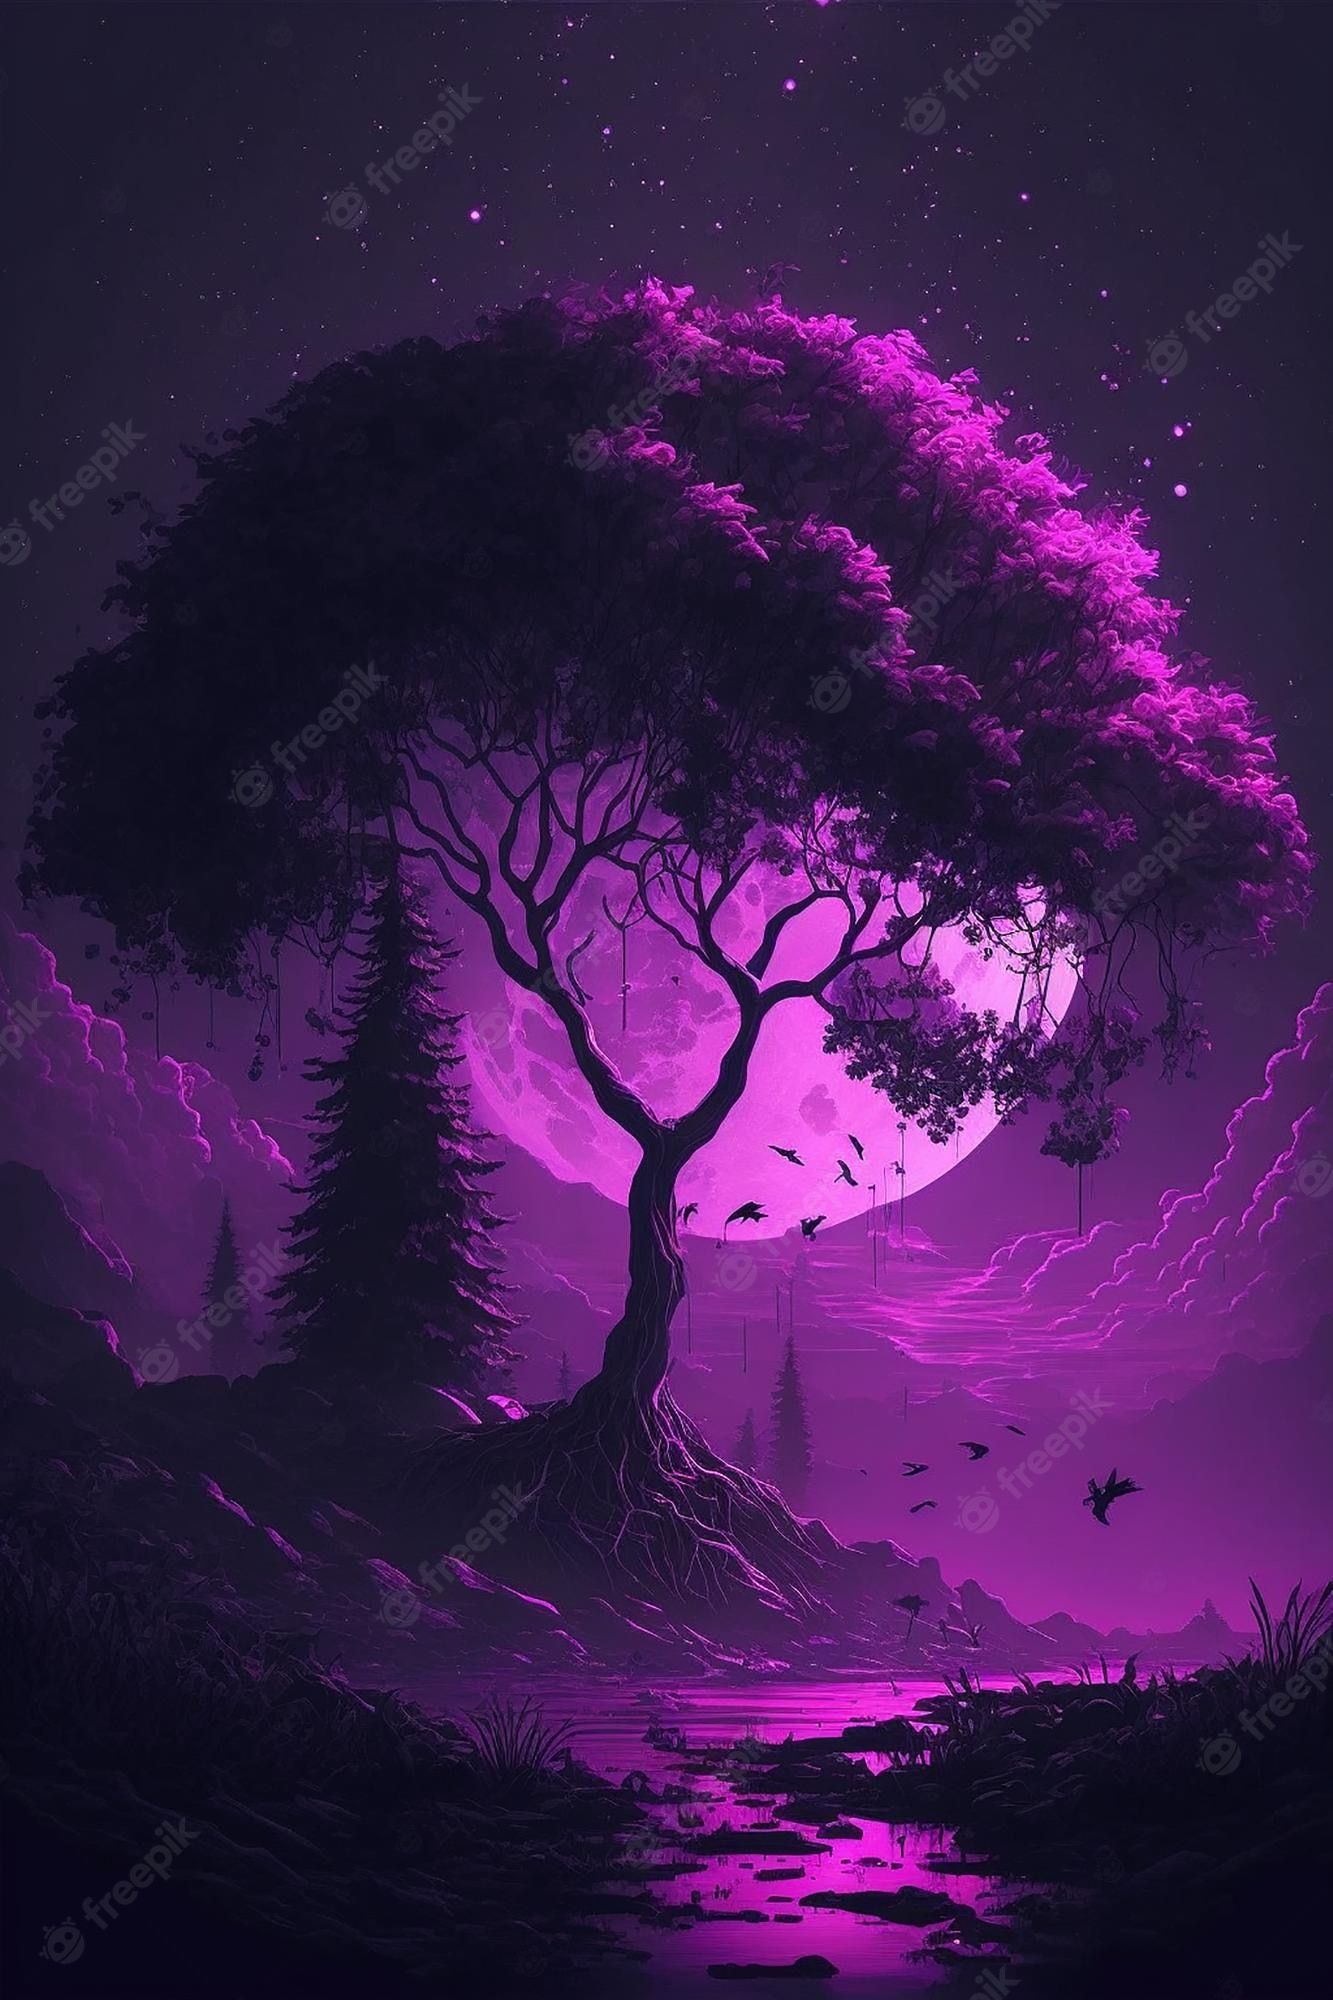 A tree in the night sky - Dark purple